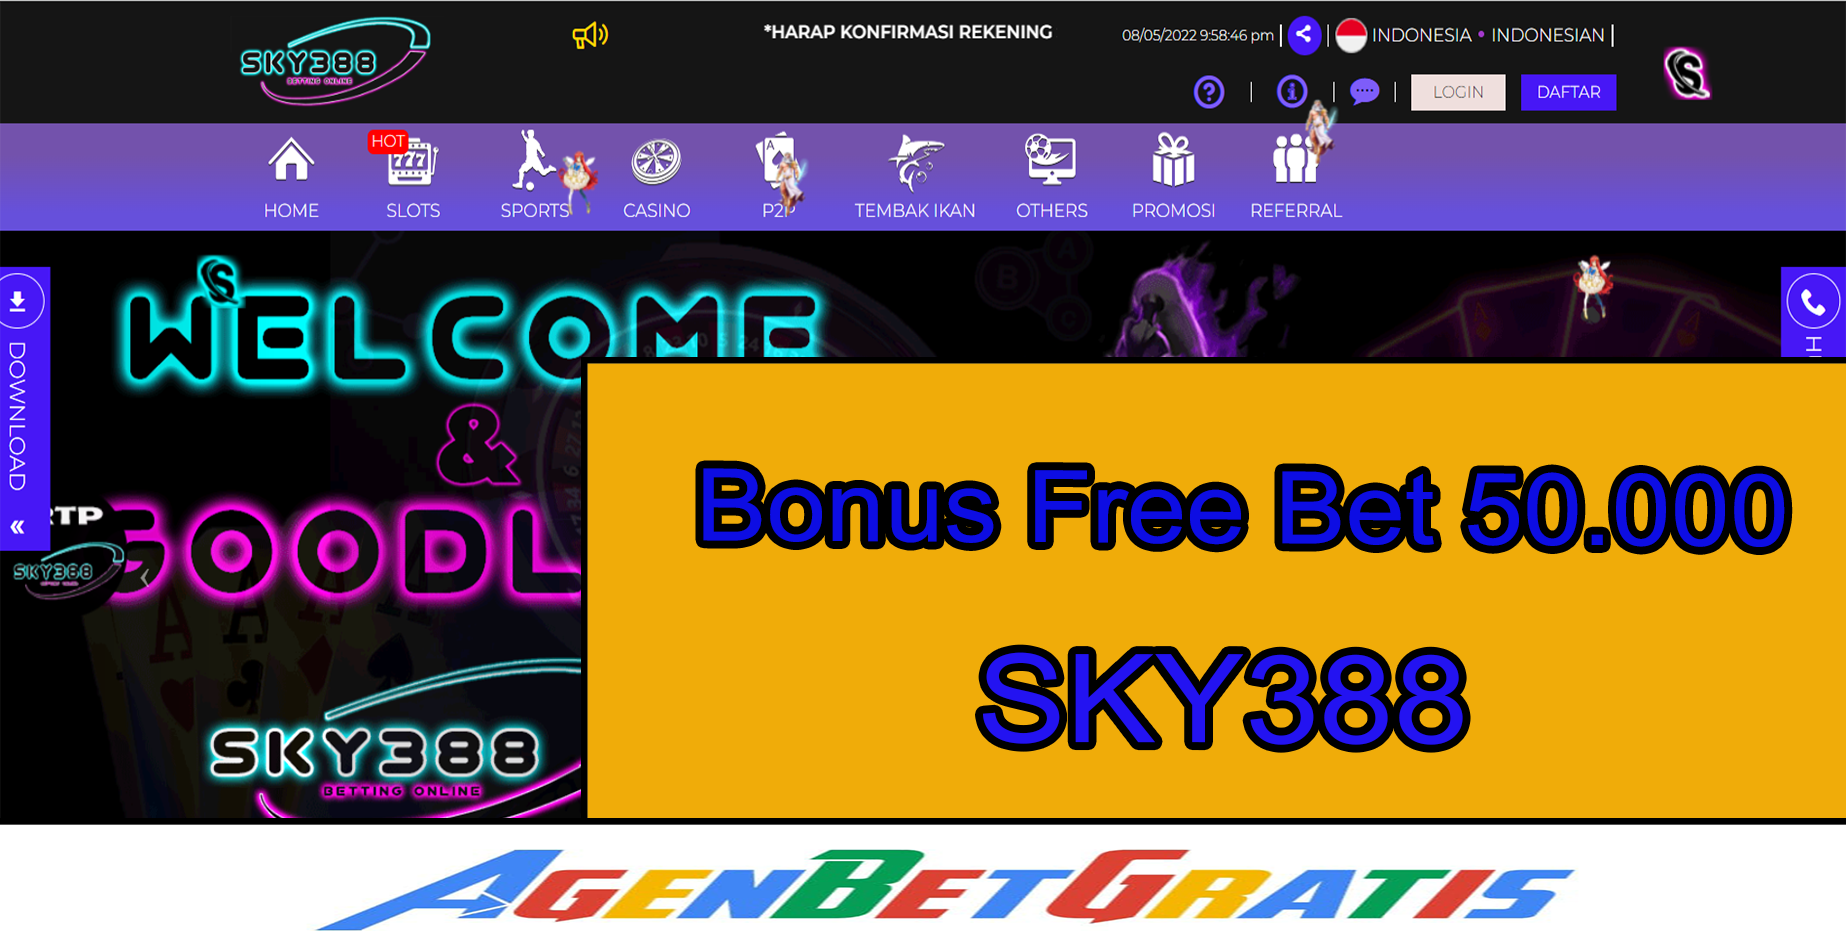 SKY388 - Bonus FreeBet 50.000